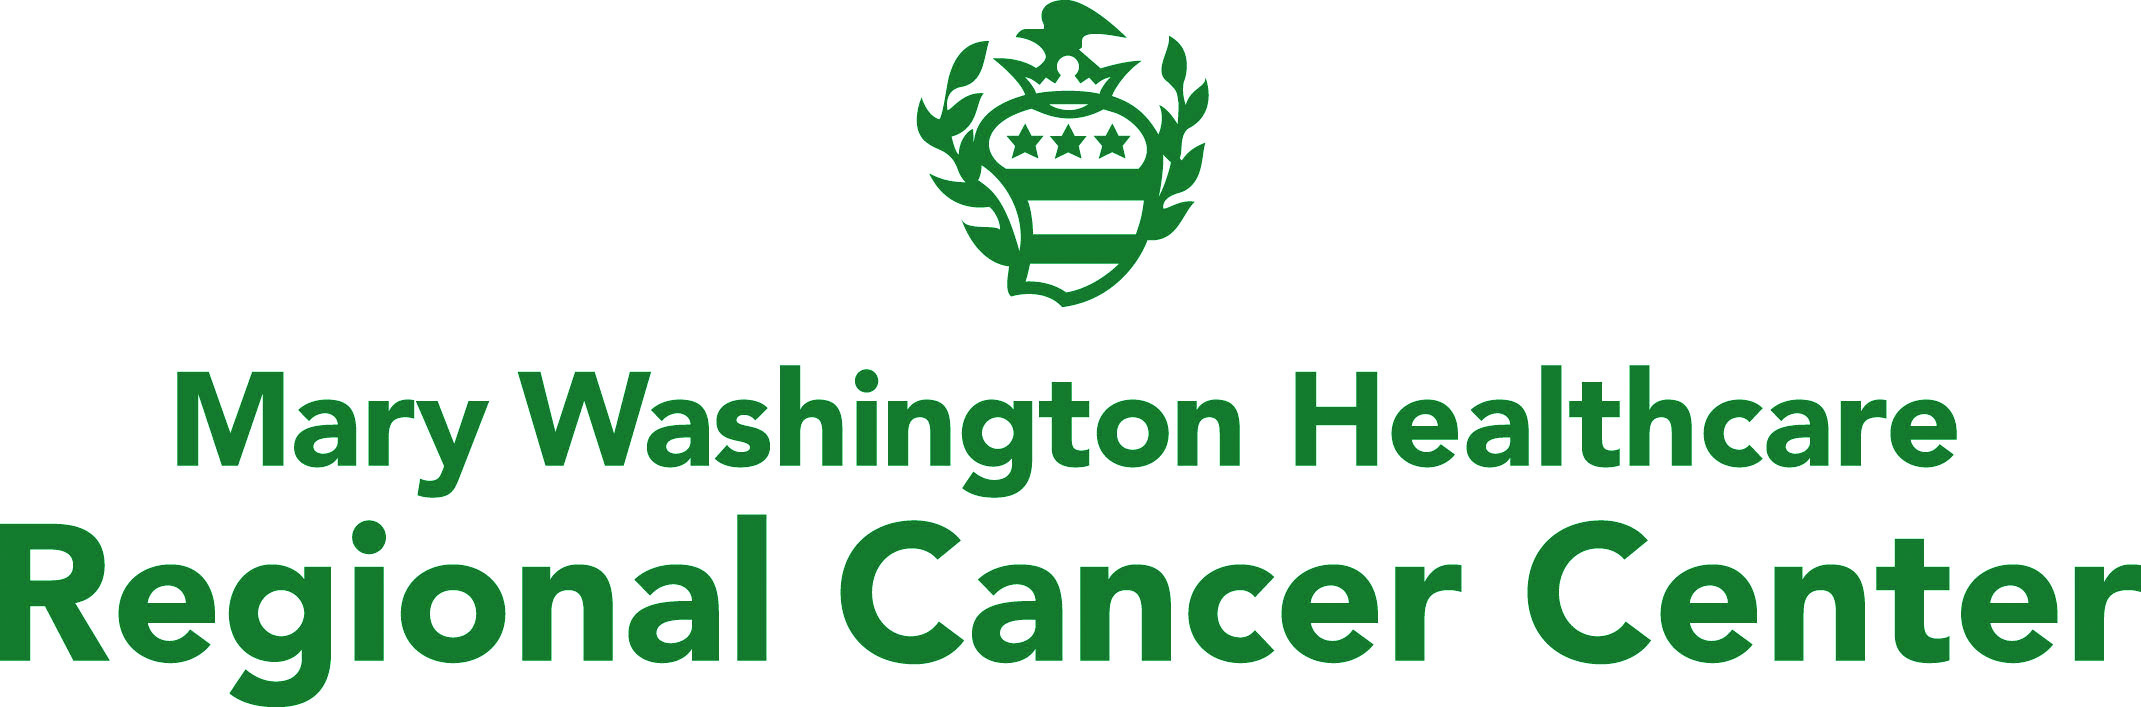 Mary Washington Healthcare Regional Cancer Center